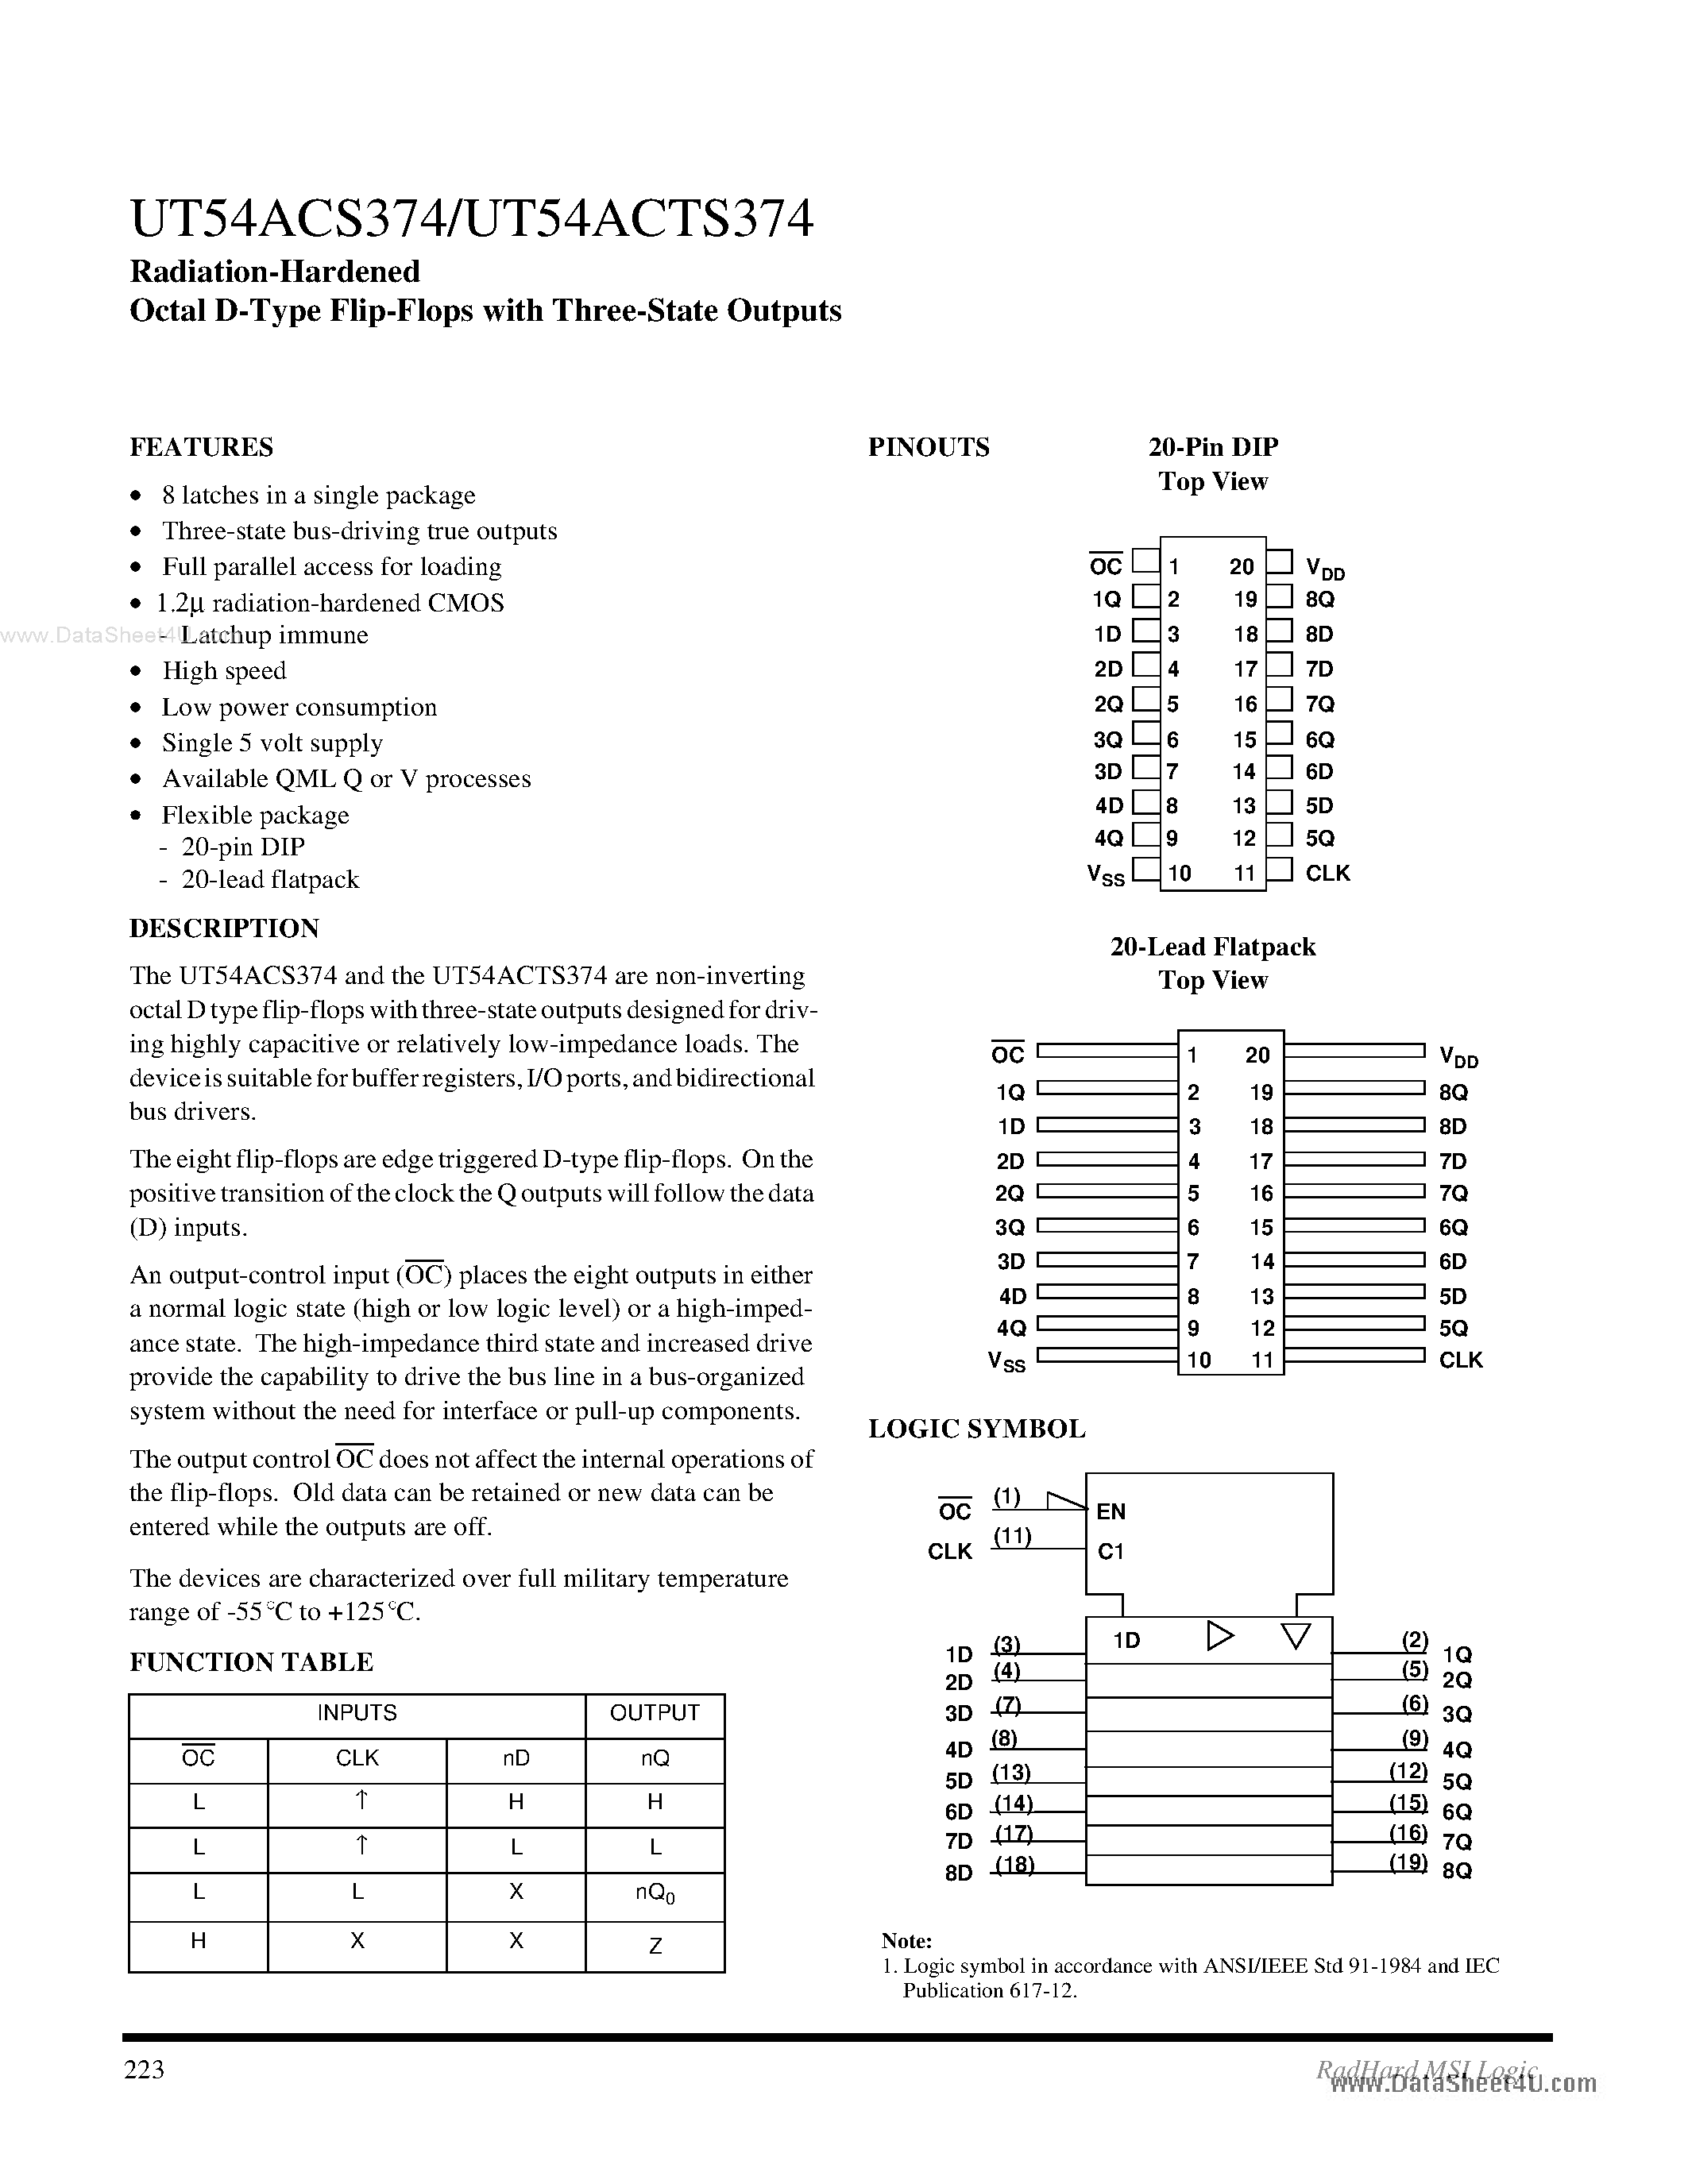 Datasheet UT54ACS374 - Radiation-Hardened Octal D-Type Flip-Flops page 1